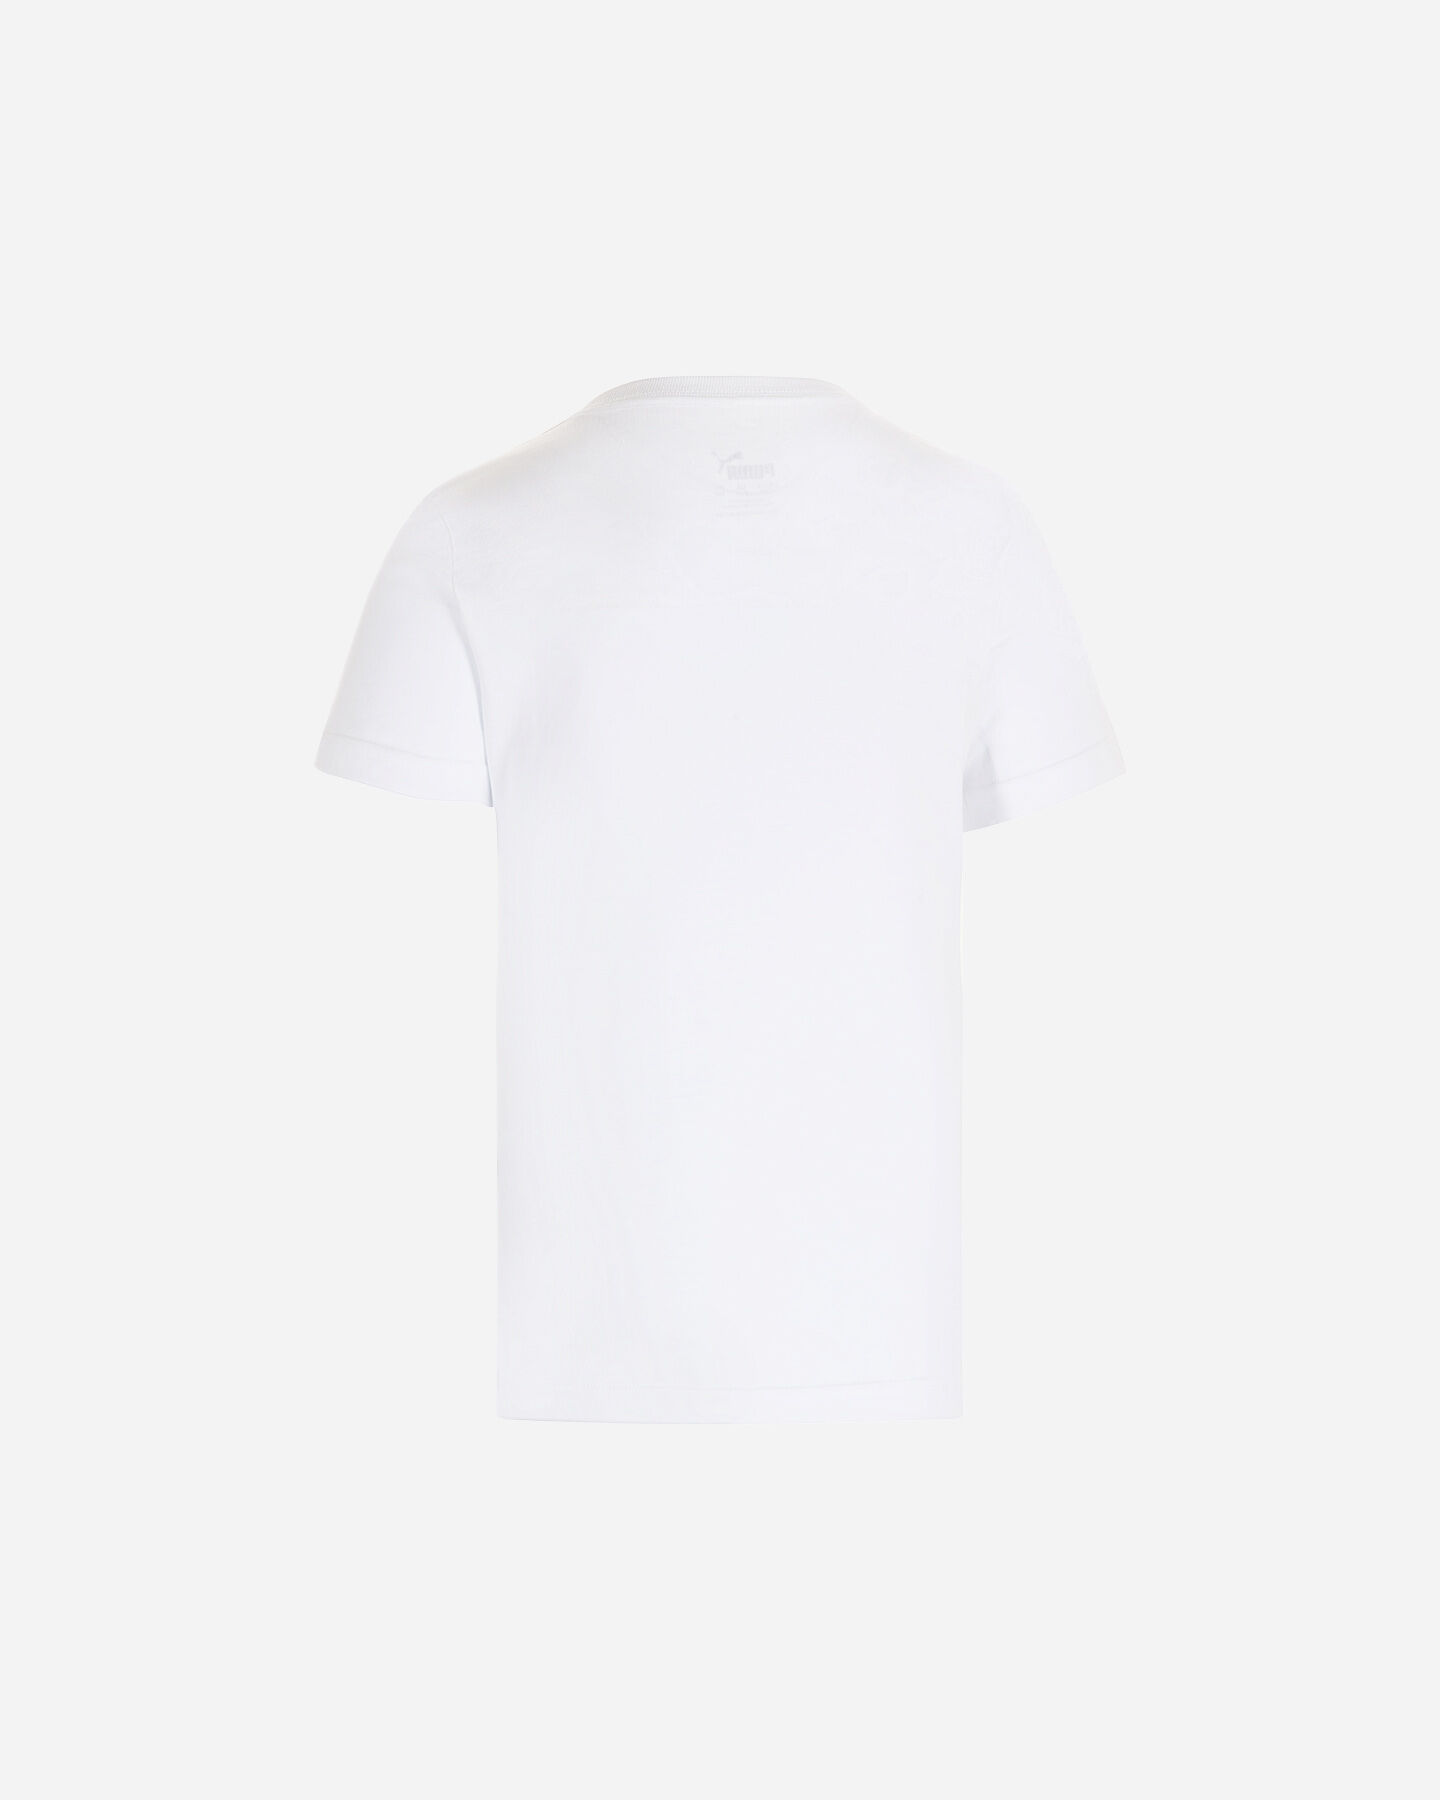  T-Shirt PUMA BASIC JR S5503730|01|116 scatto 1